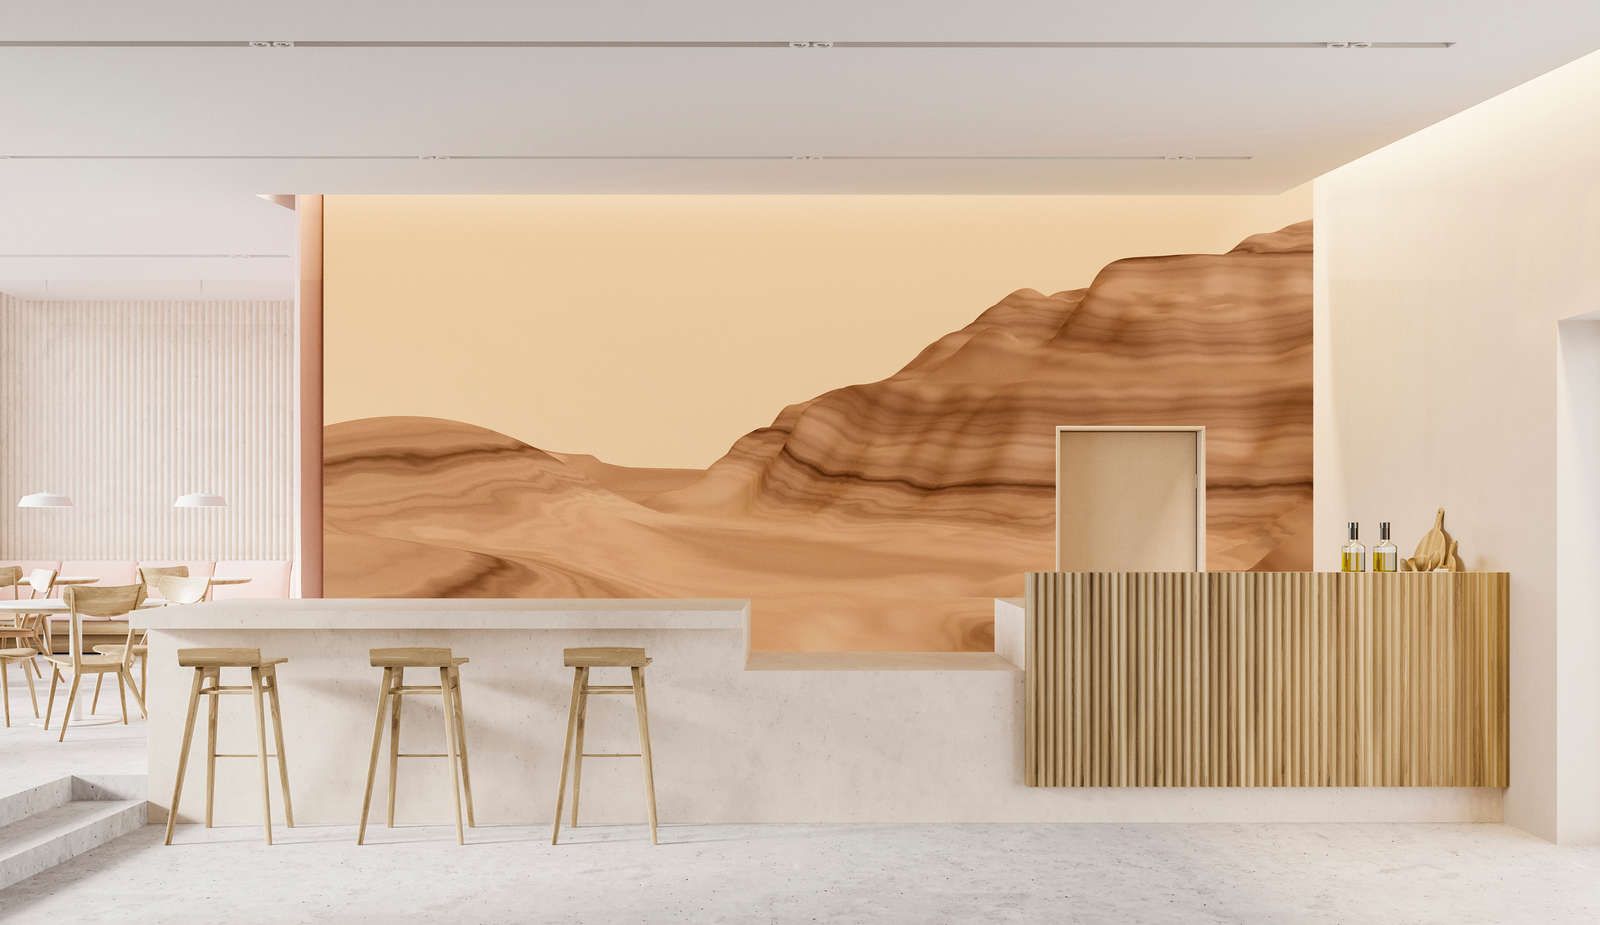             Photo wallpaper »luke« - Abstract desert landscape - Lightly textured non-woven fabric
        